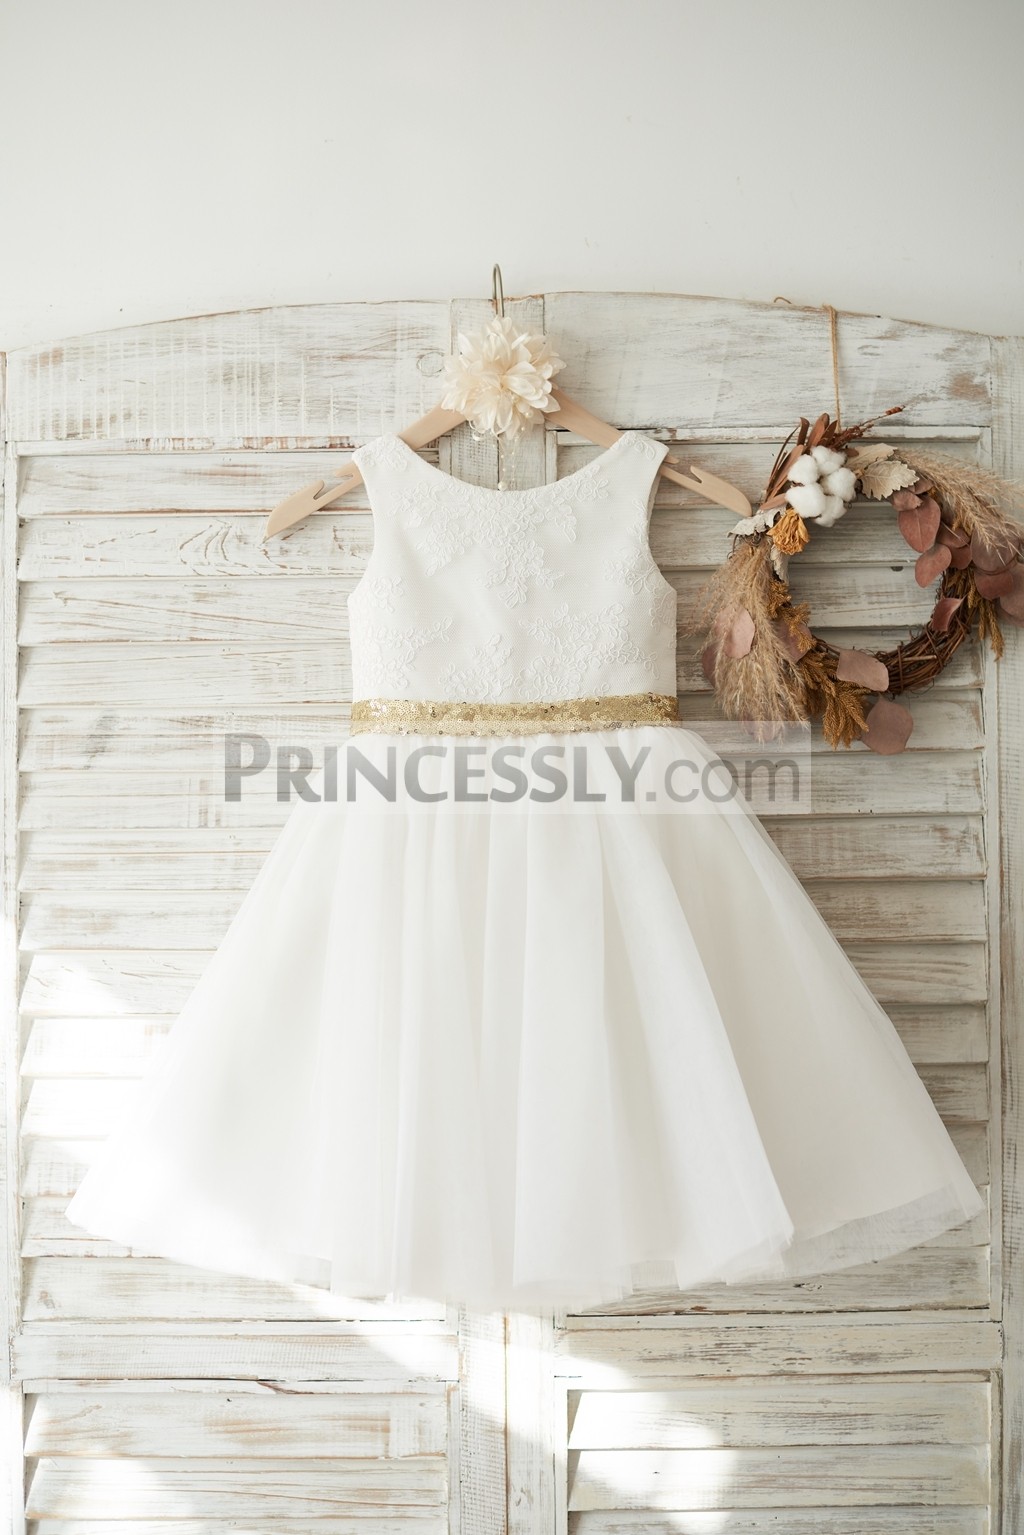 Ivory lace tulle wedding baby girl dress